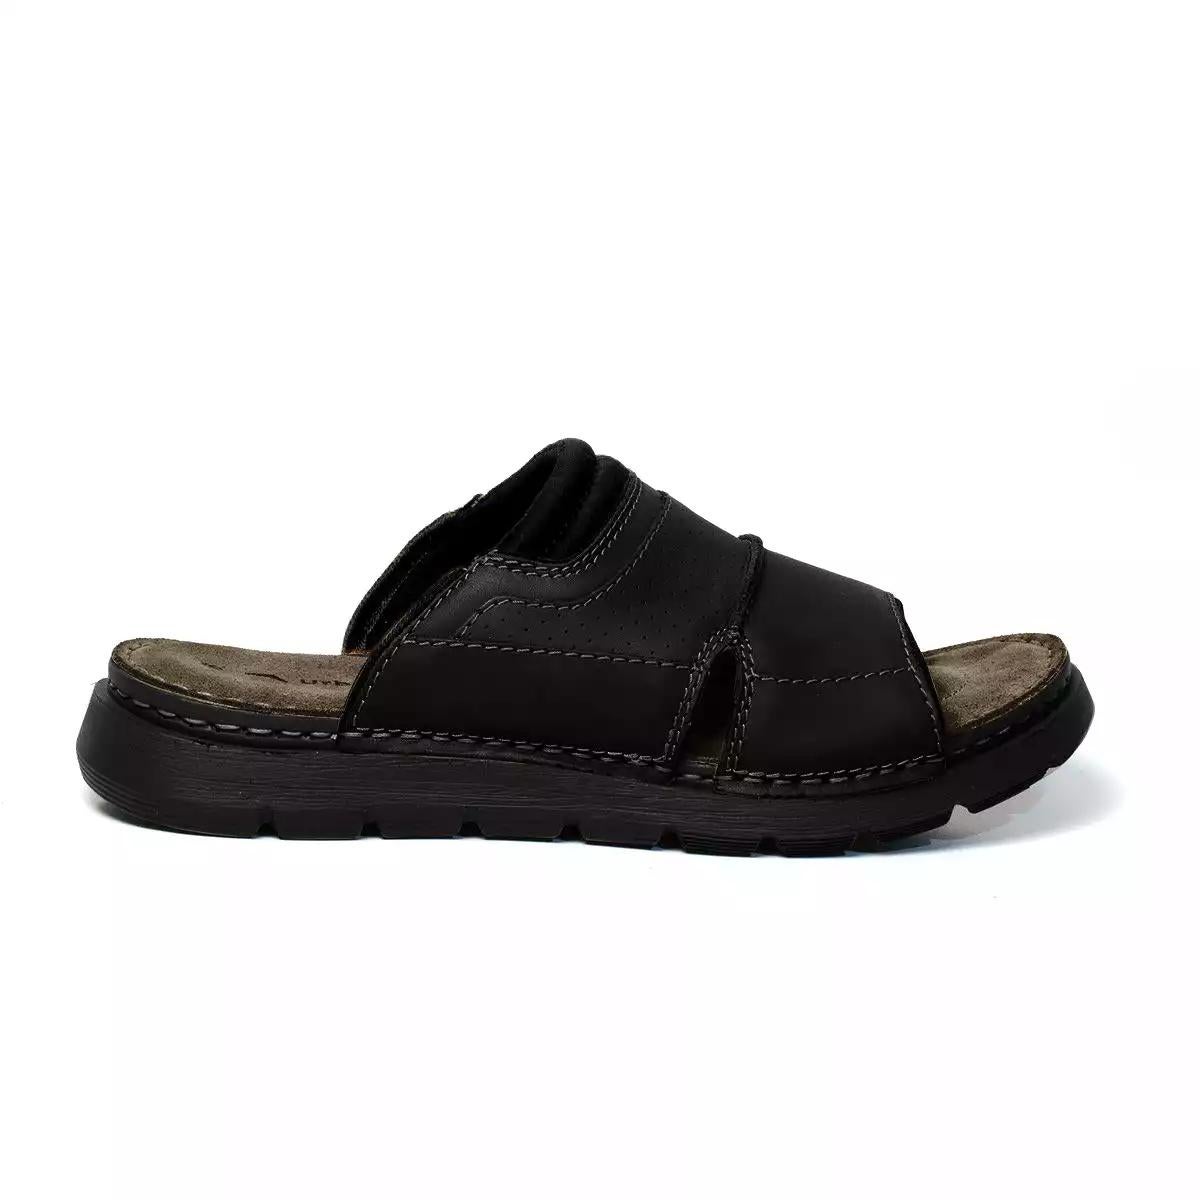 Men Leather Casual Sandals ǀ BORA 6067